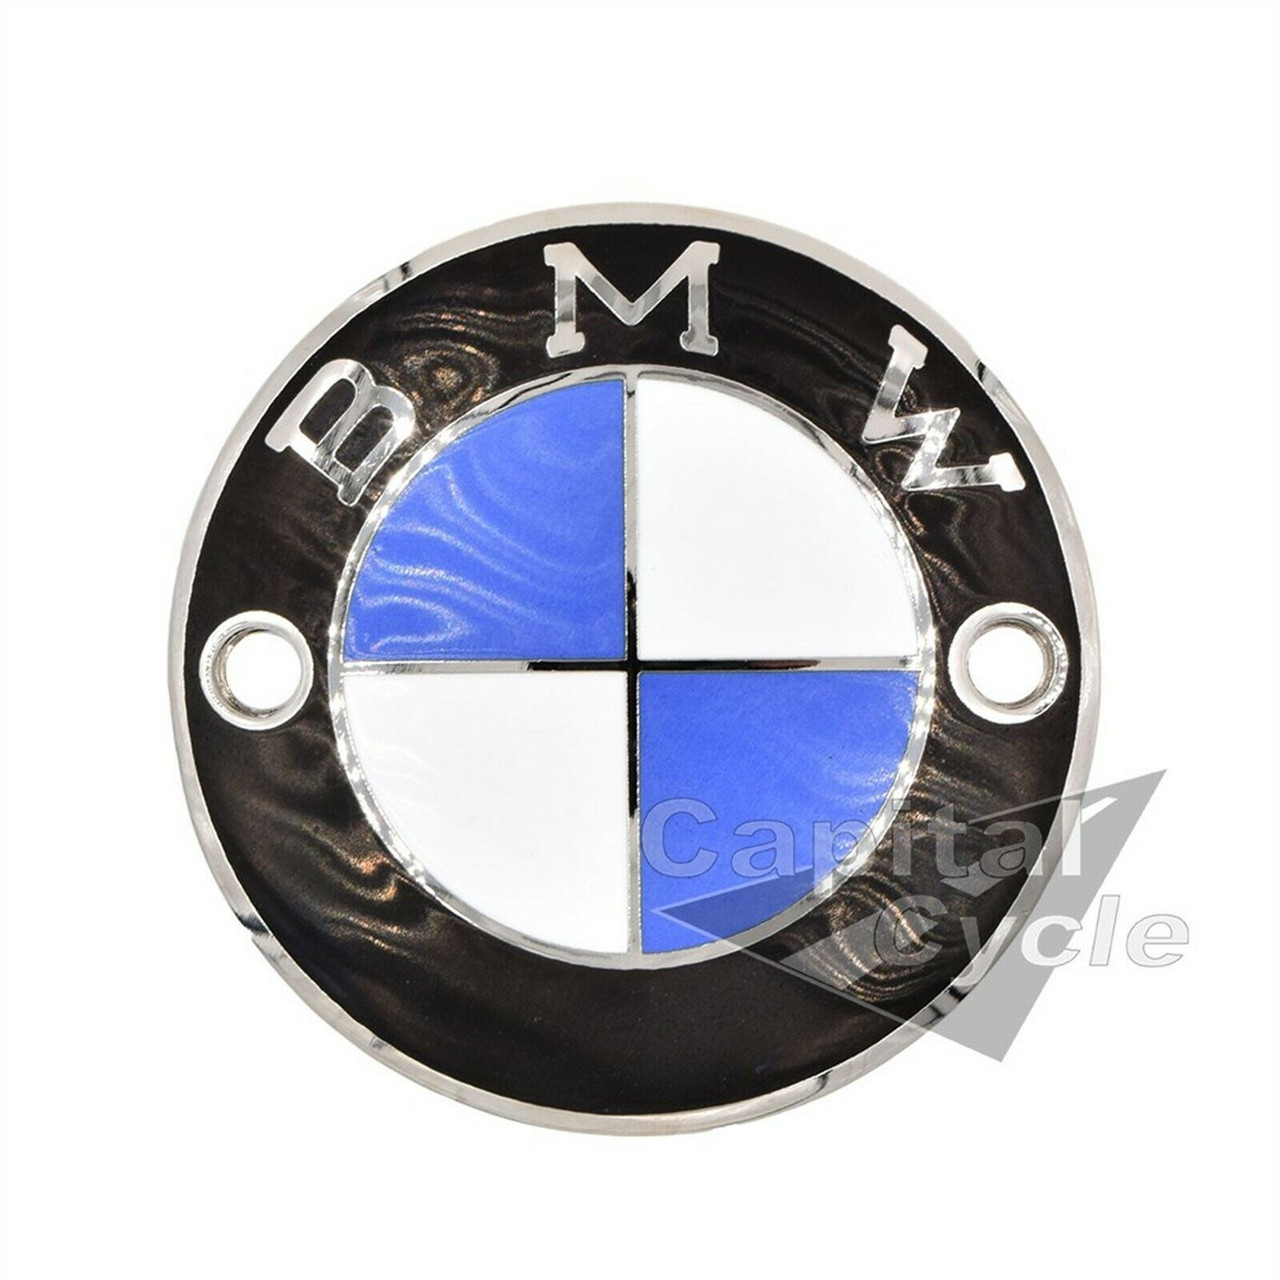 Enamel plaque BMW 12 LOGO collectable sign circle WARRANTY-10 ys metal  emblem